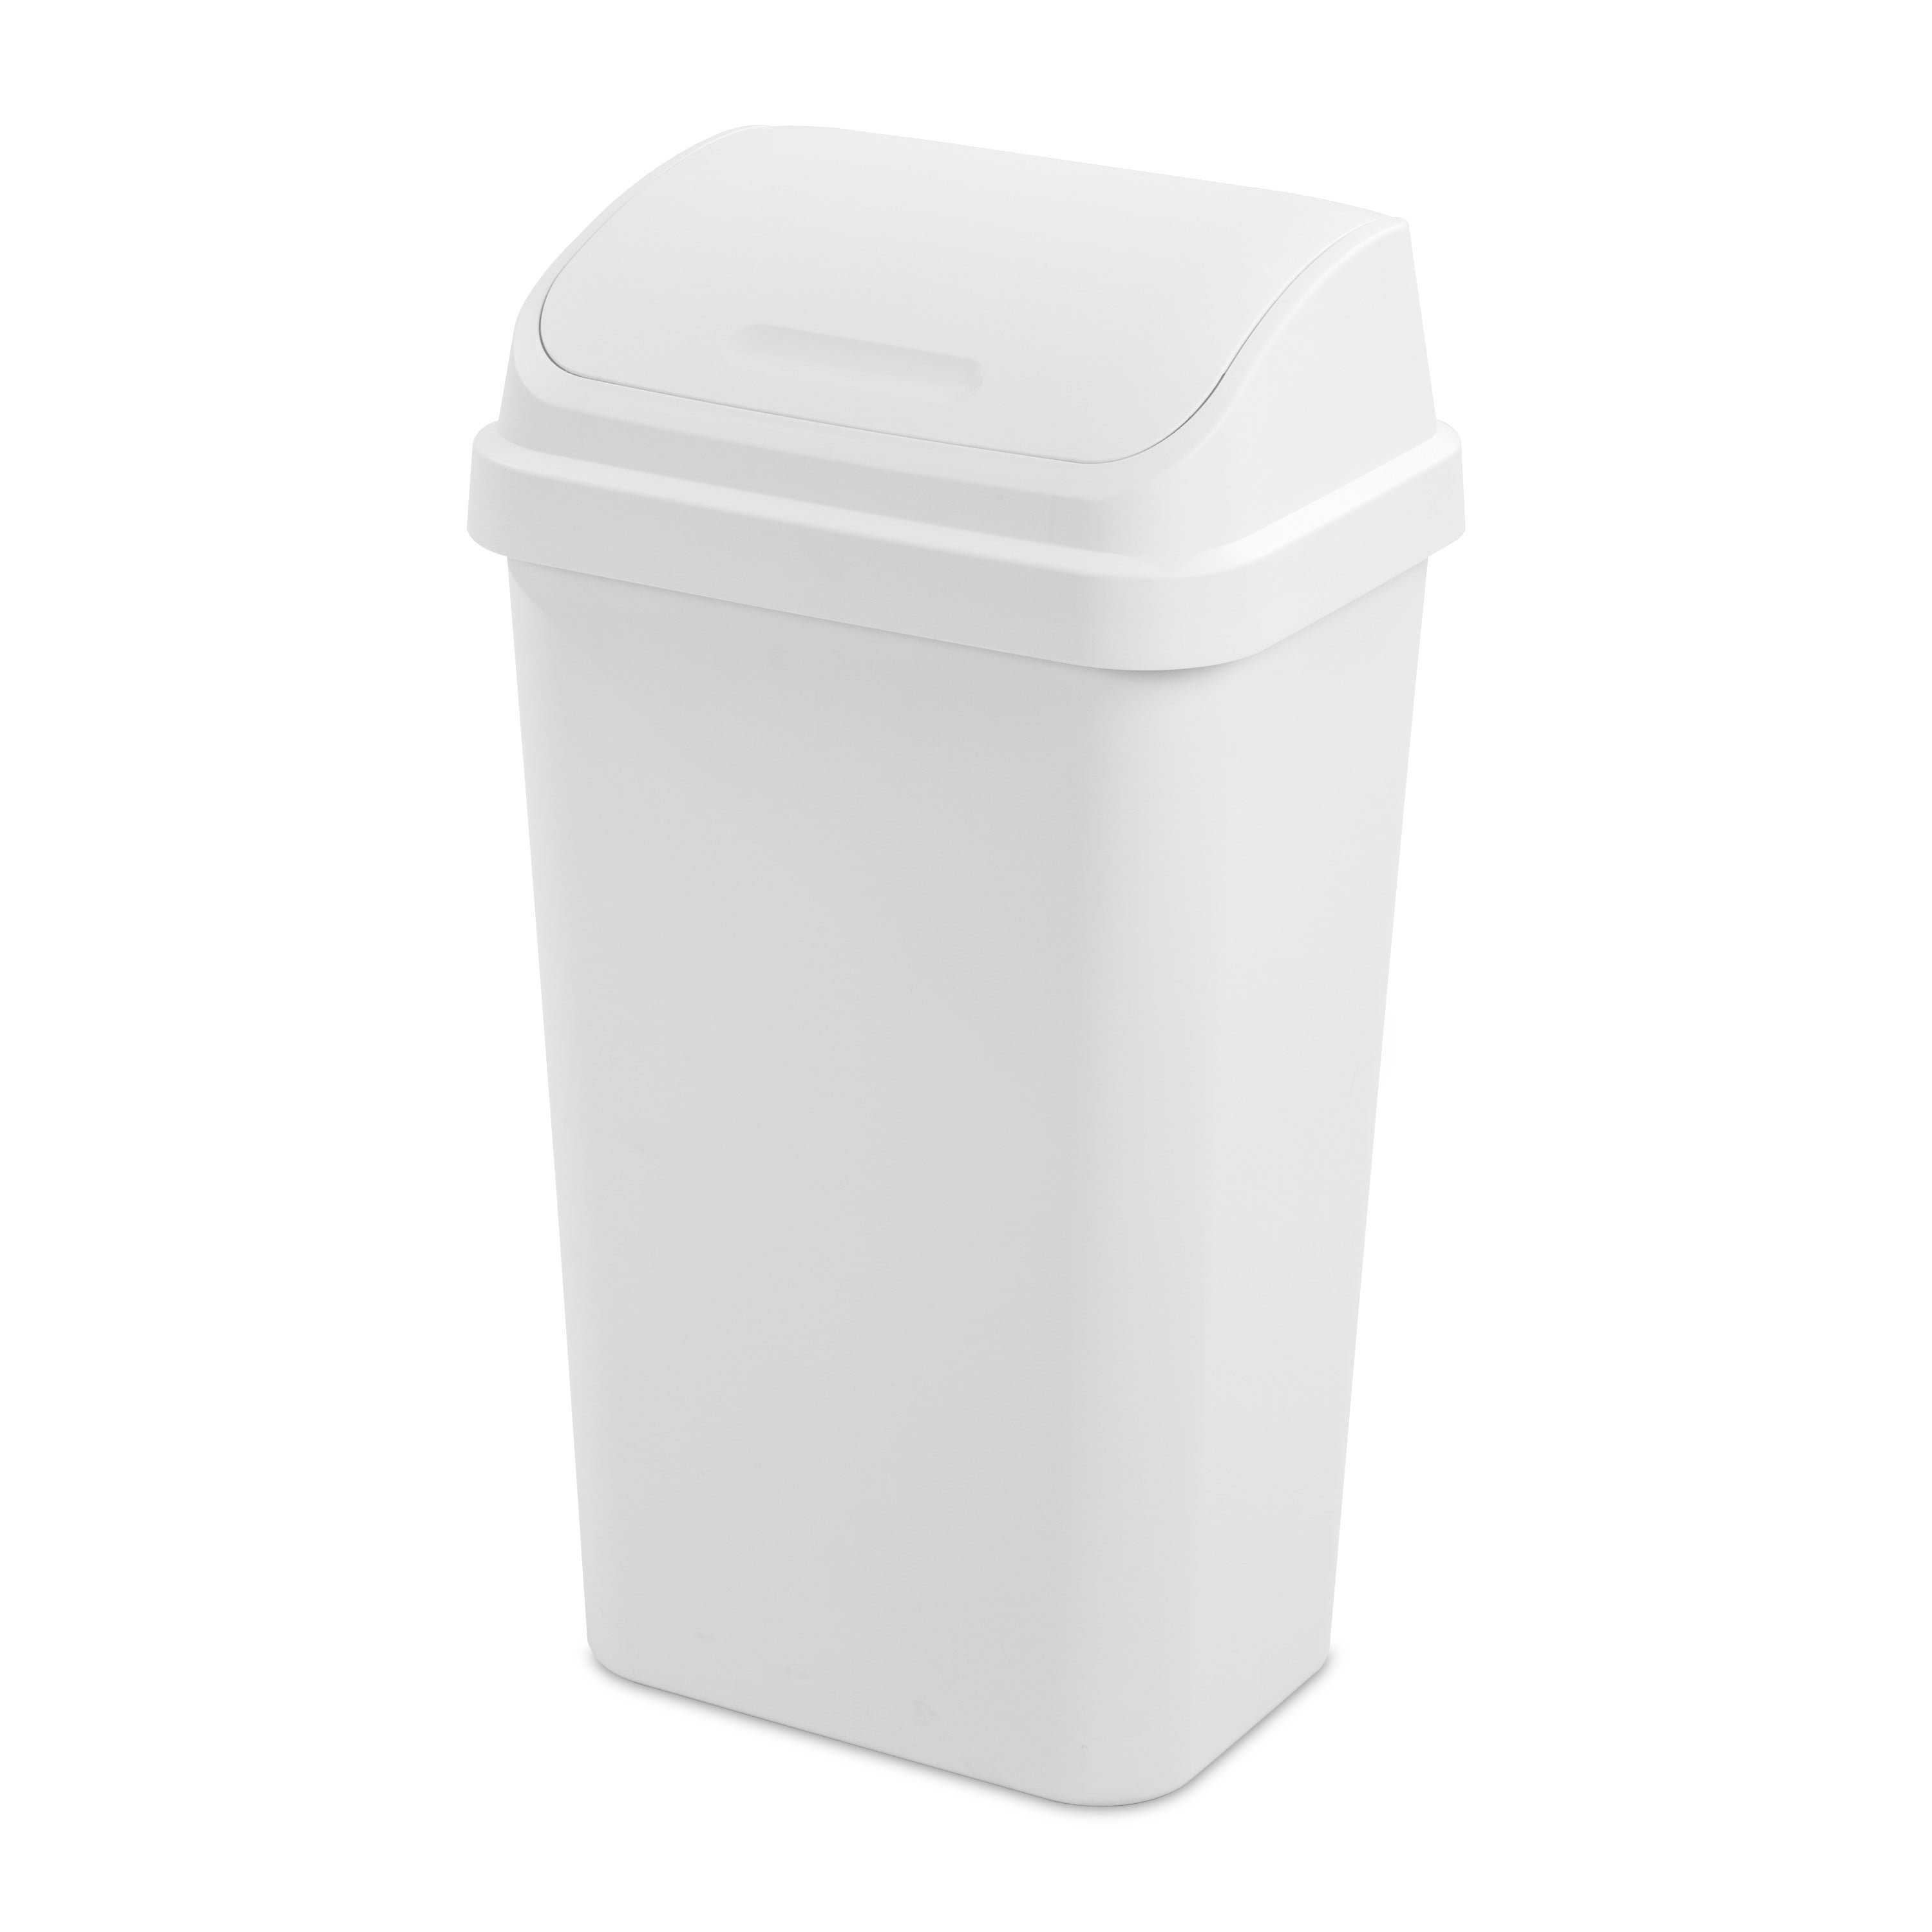 Sterilite 13 Gallon Trash Can, Plastic Swing Top Kitchen Trash Can, WHITE  for Sale in Dublin, OH - OfferUp